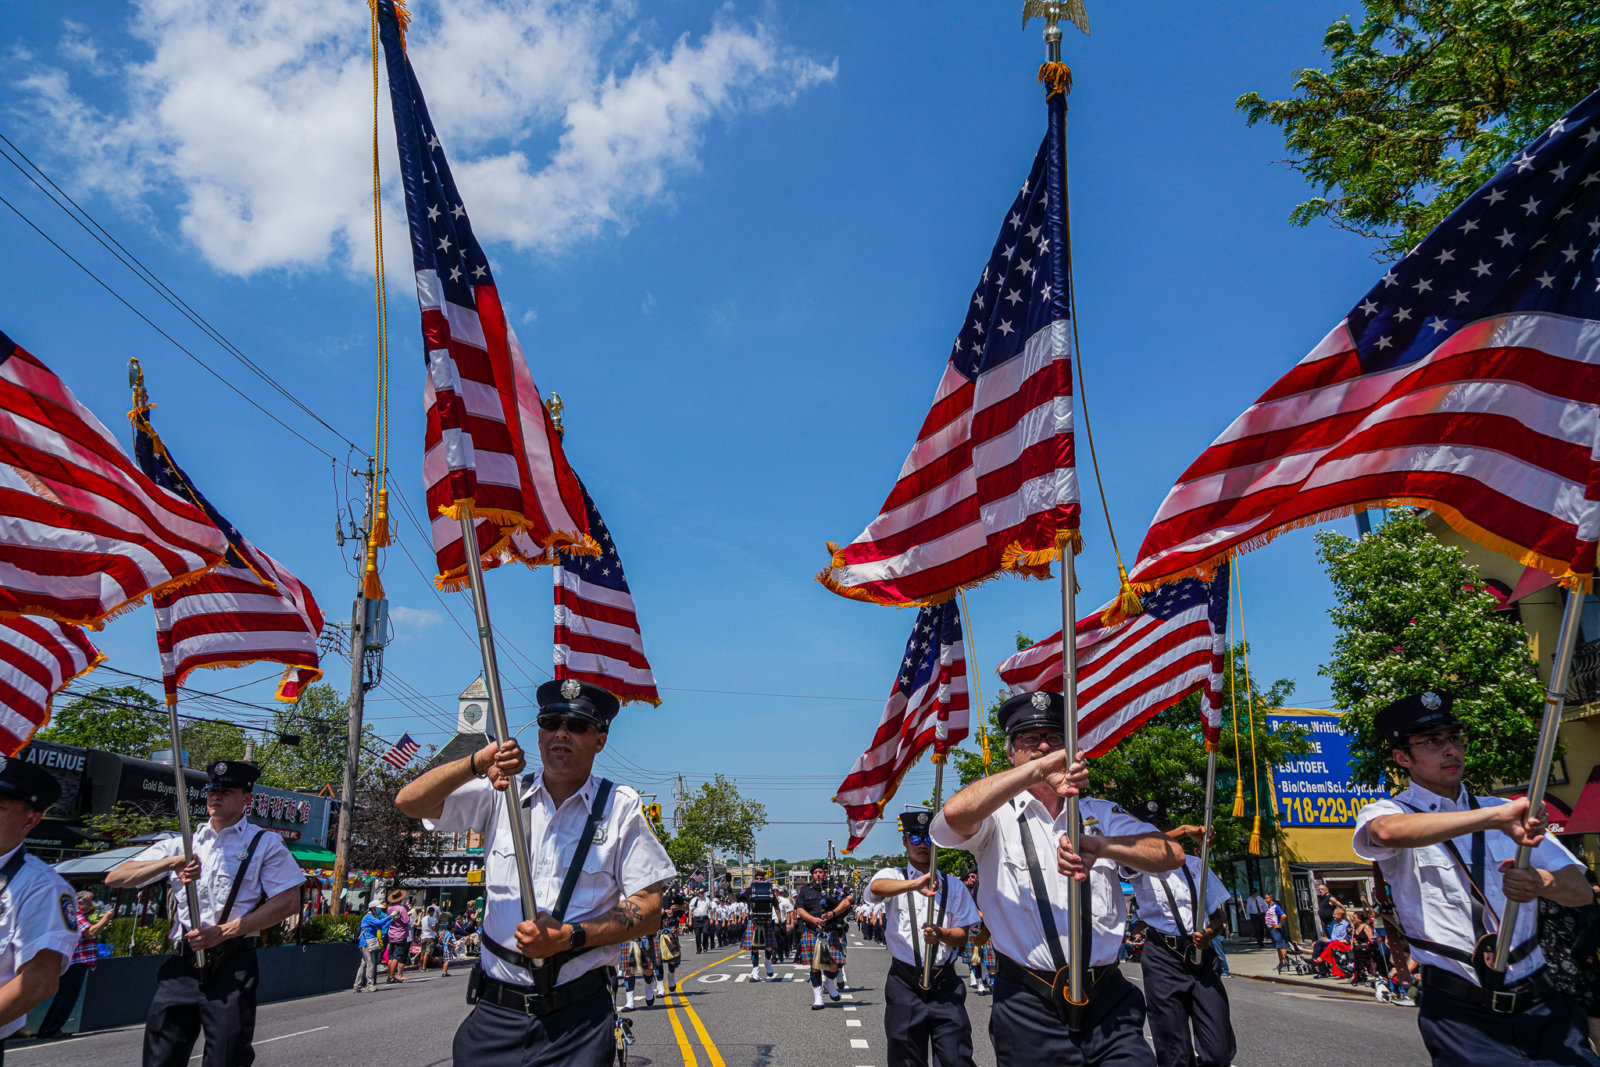 Memorial Day 2022 Little NeckDouglaston Parade brings patriotic cheer